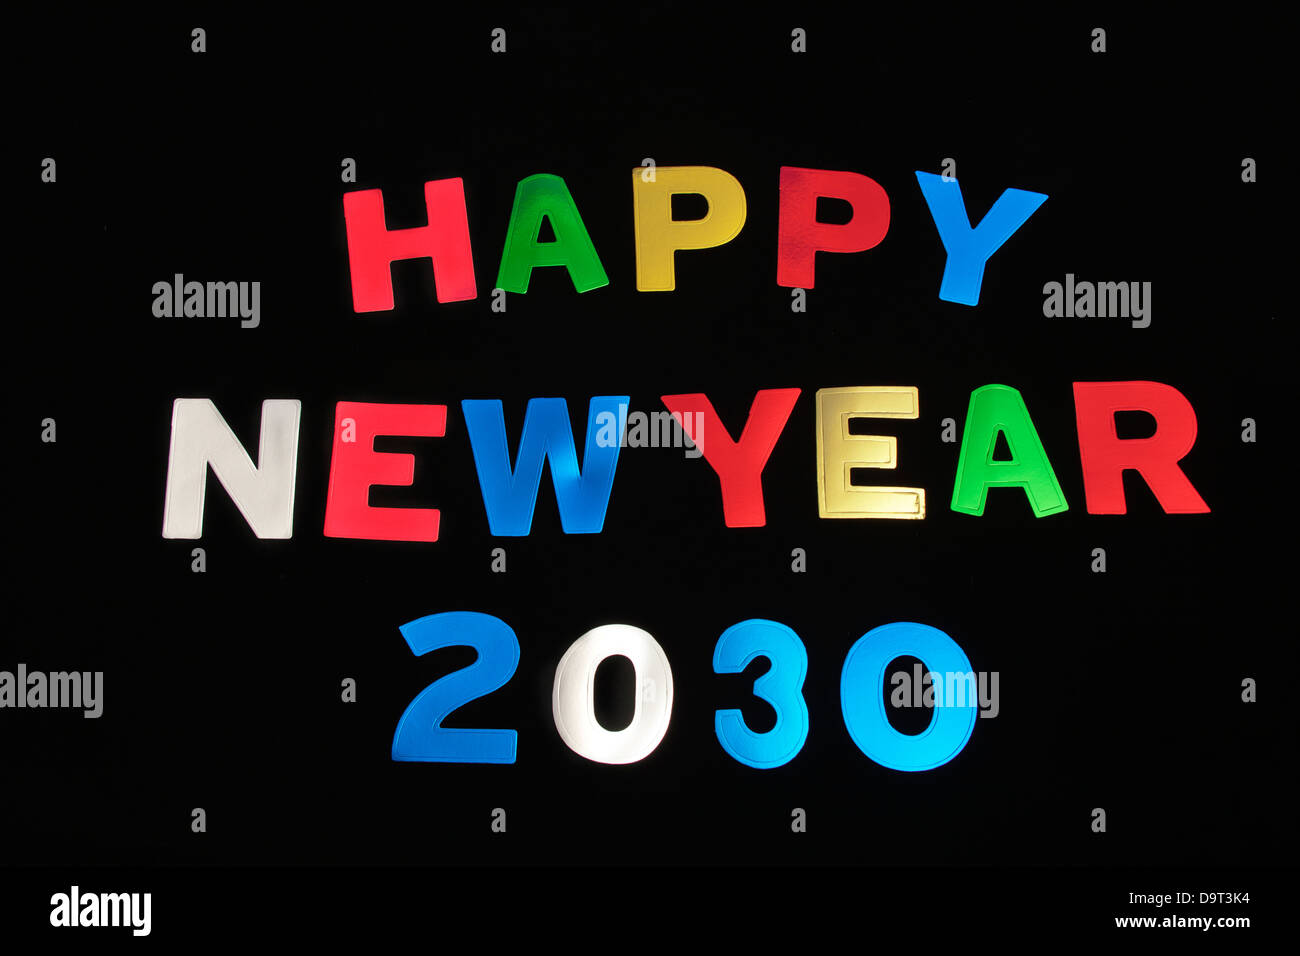 happy-new-year-2030-stock-photo-alamy